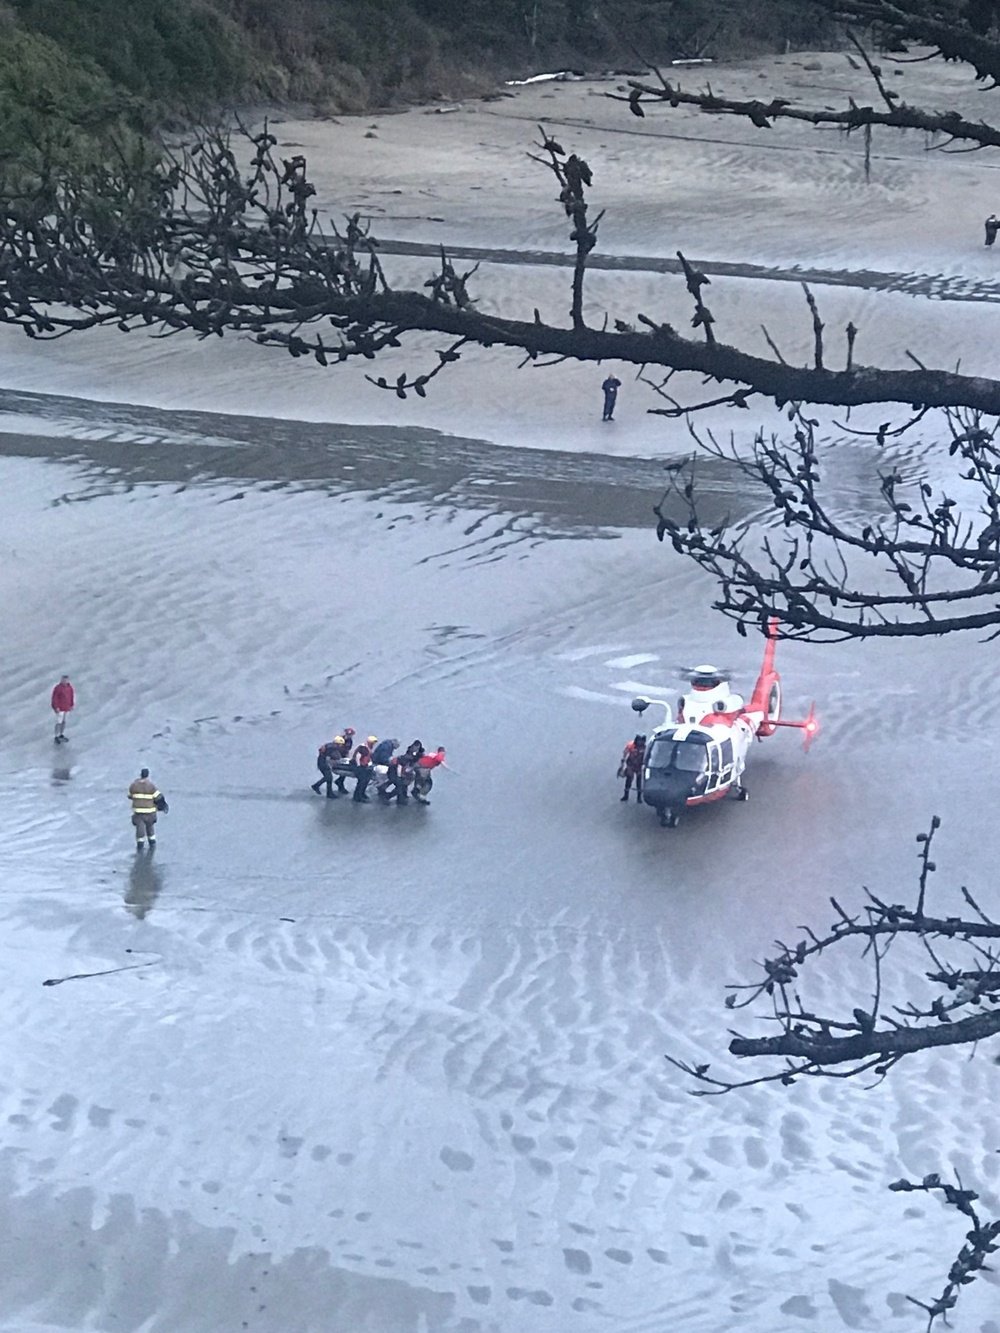 Unconscious surfer rescued by Coast Guard near Newport, Oregon